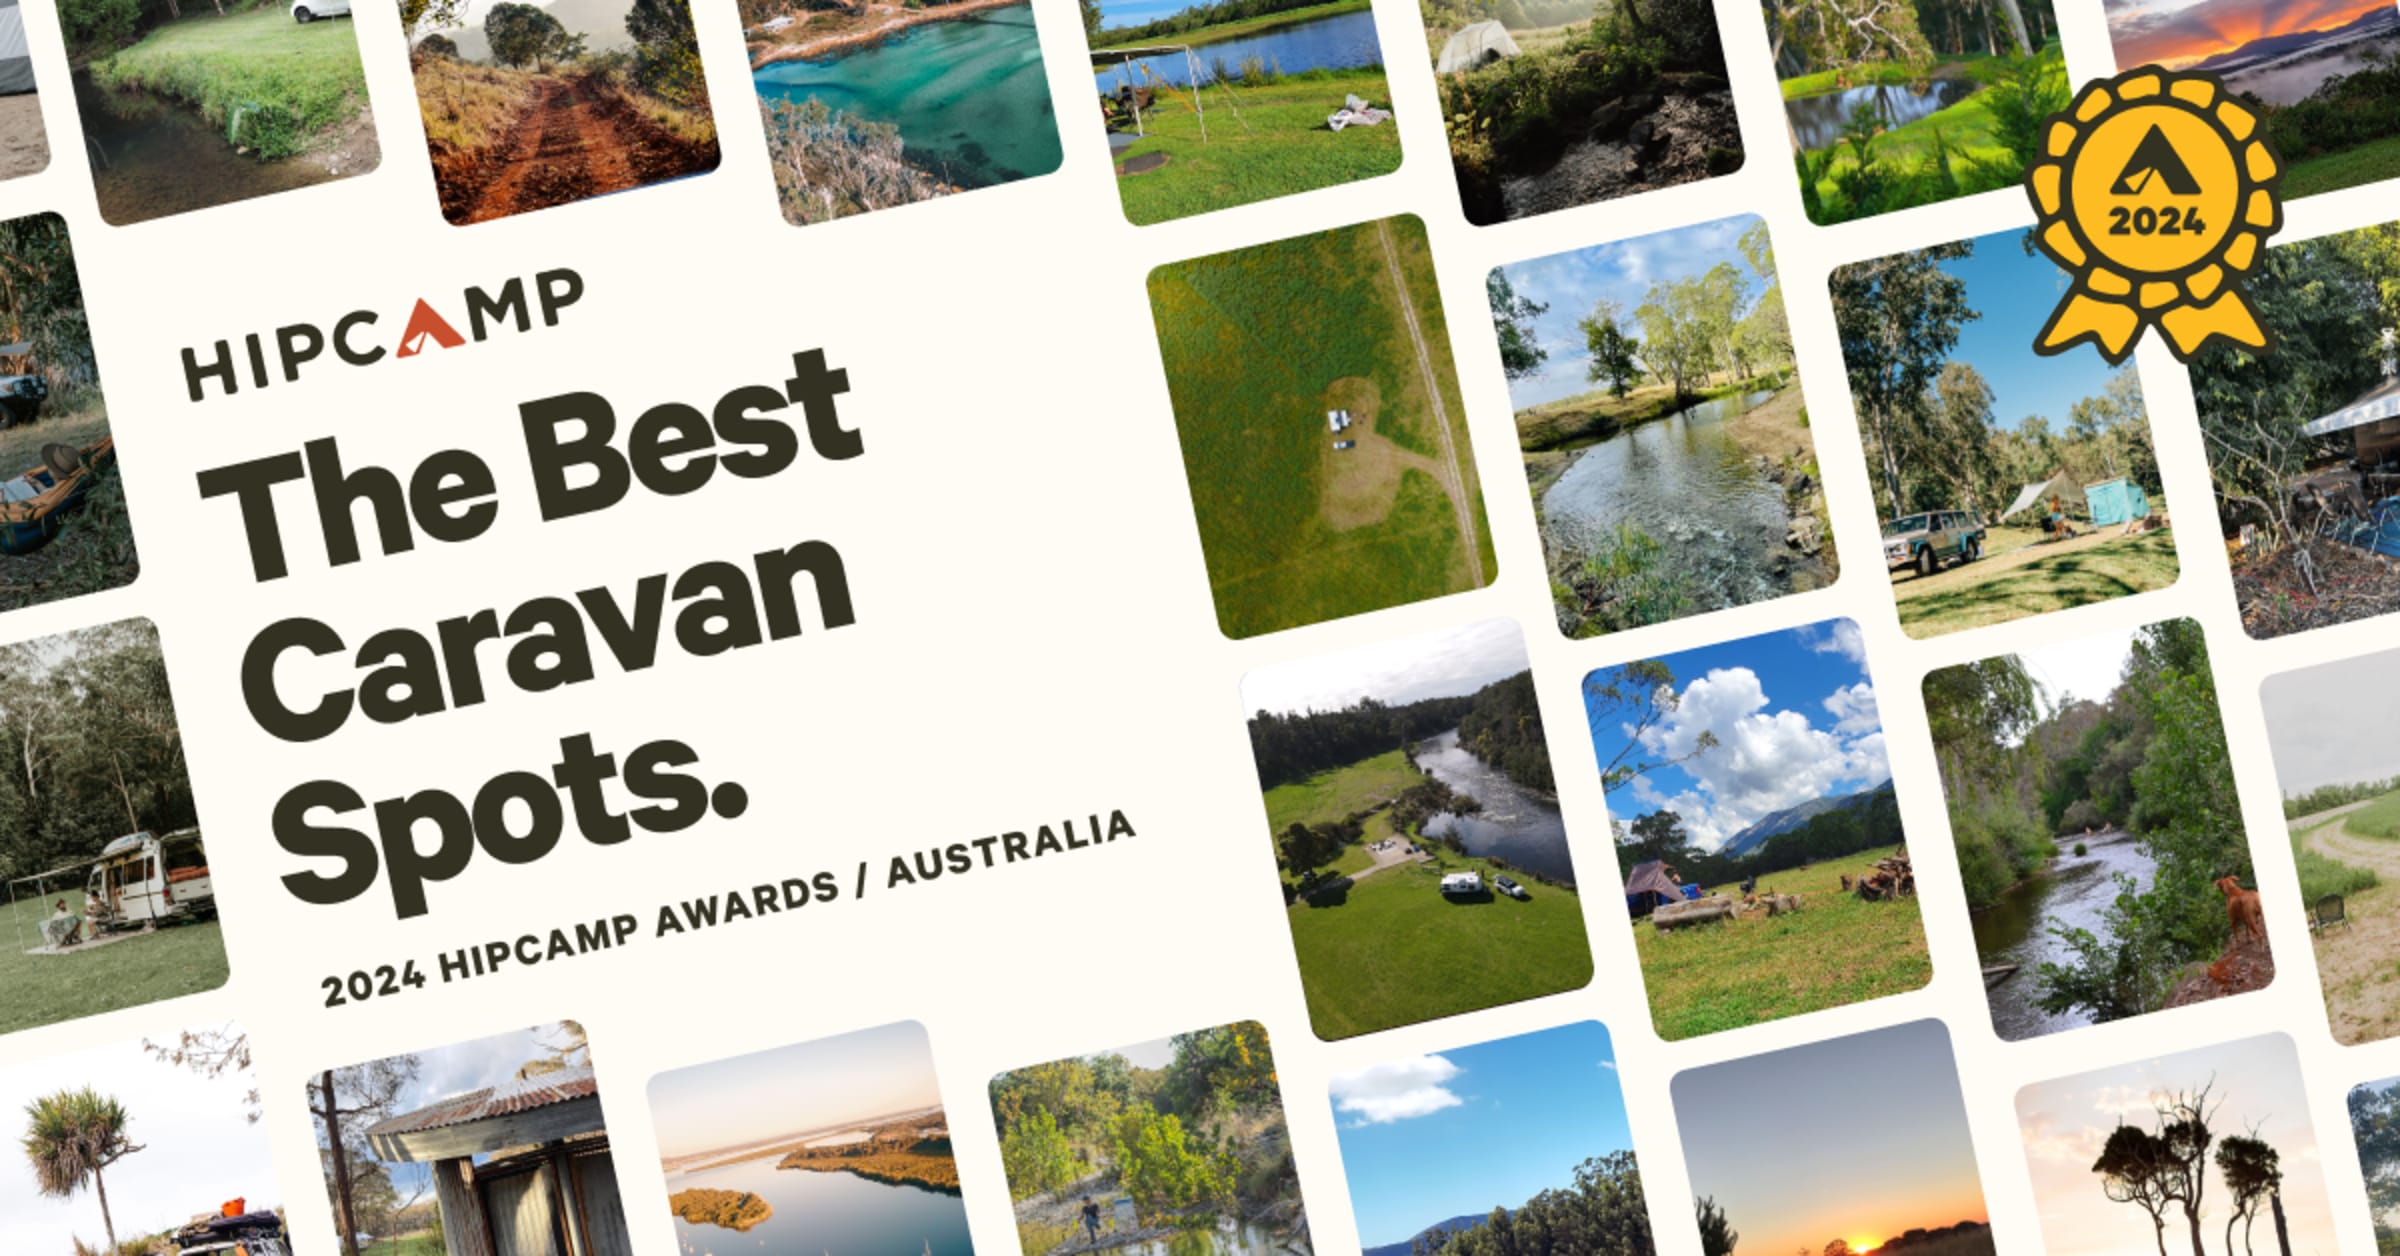 Best caravan spots in Australia